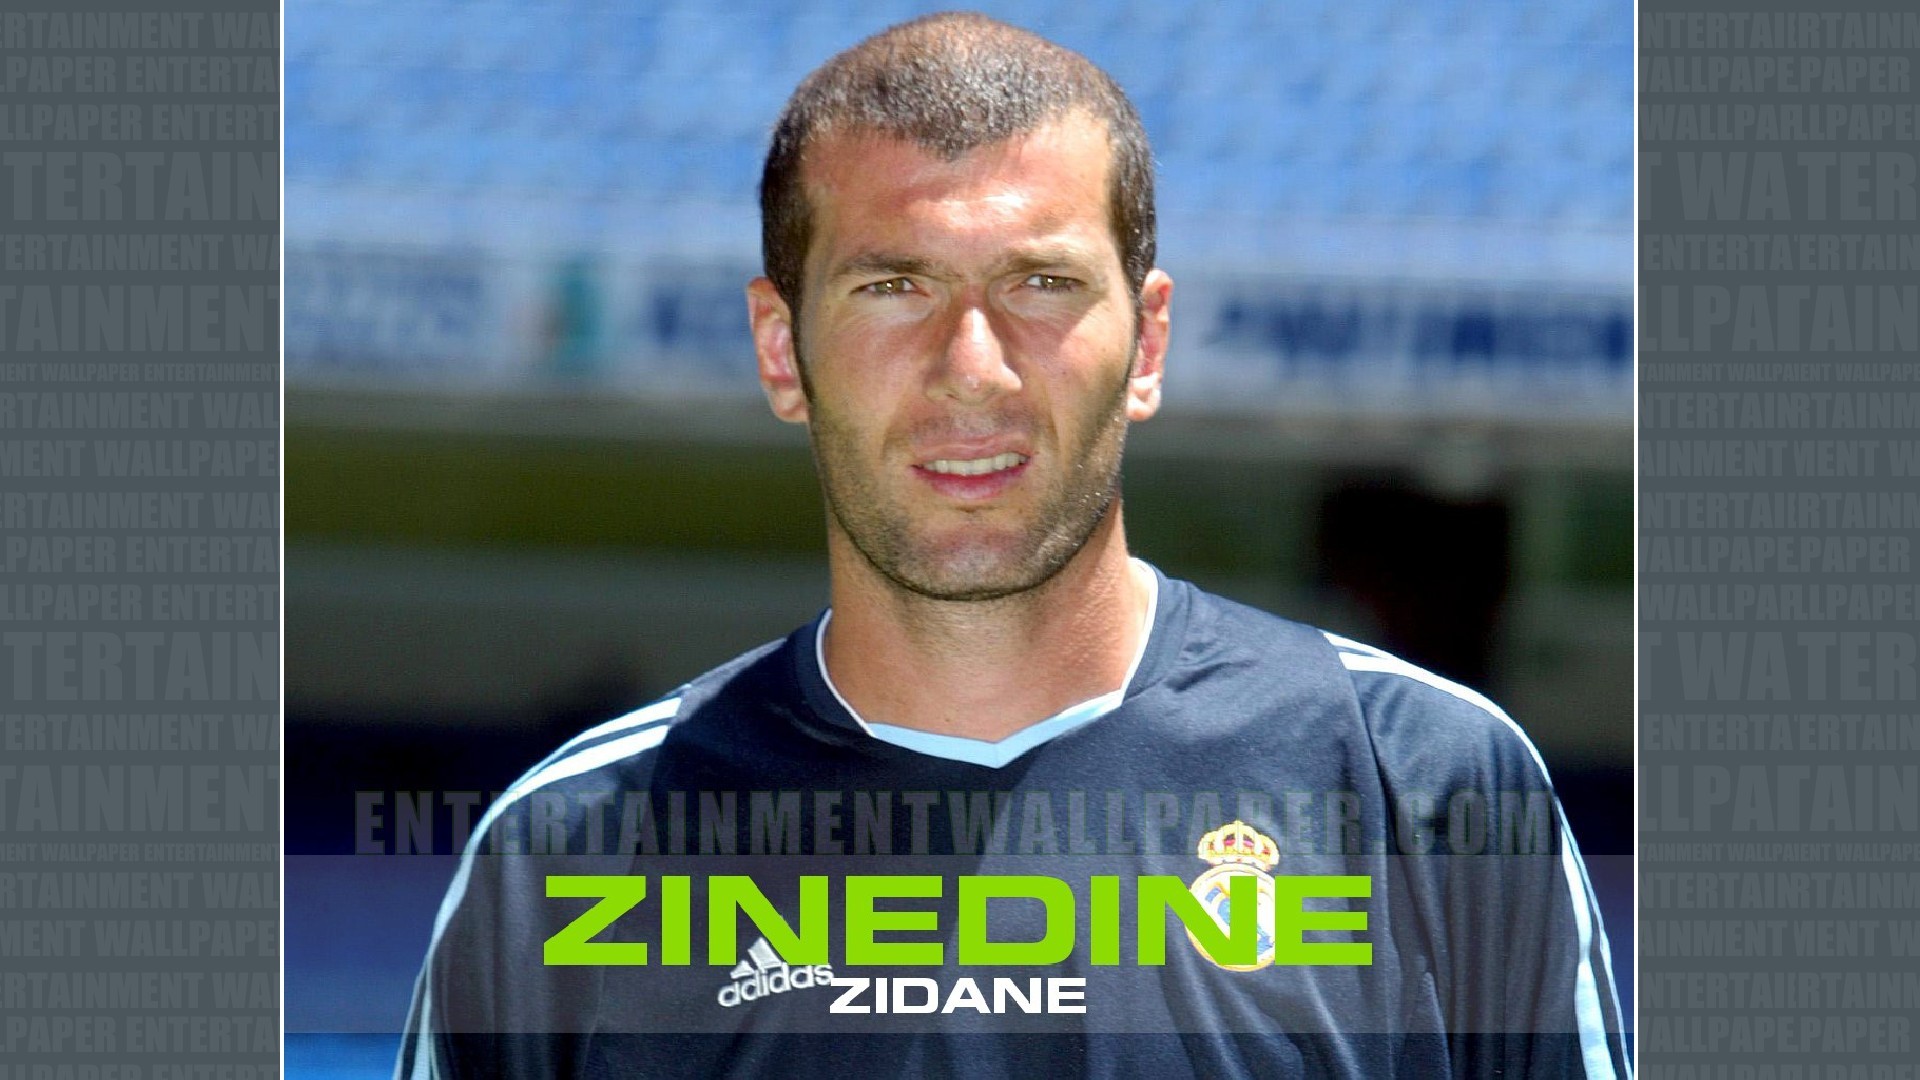 1920x1080 Zinedine Zidane Wallpaper - Original size, download now.